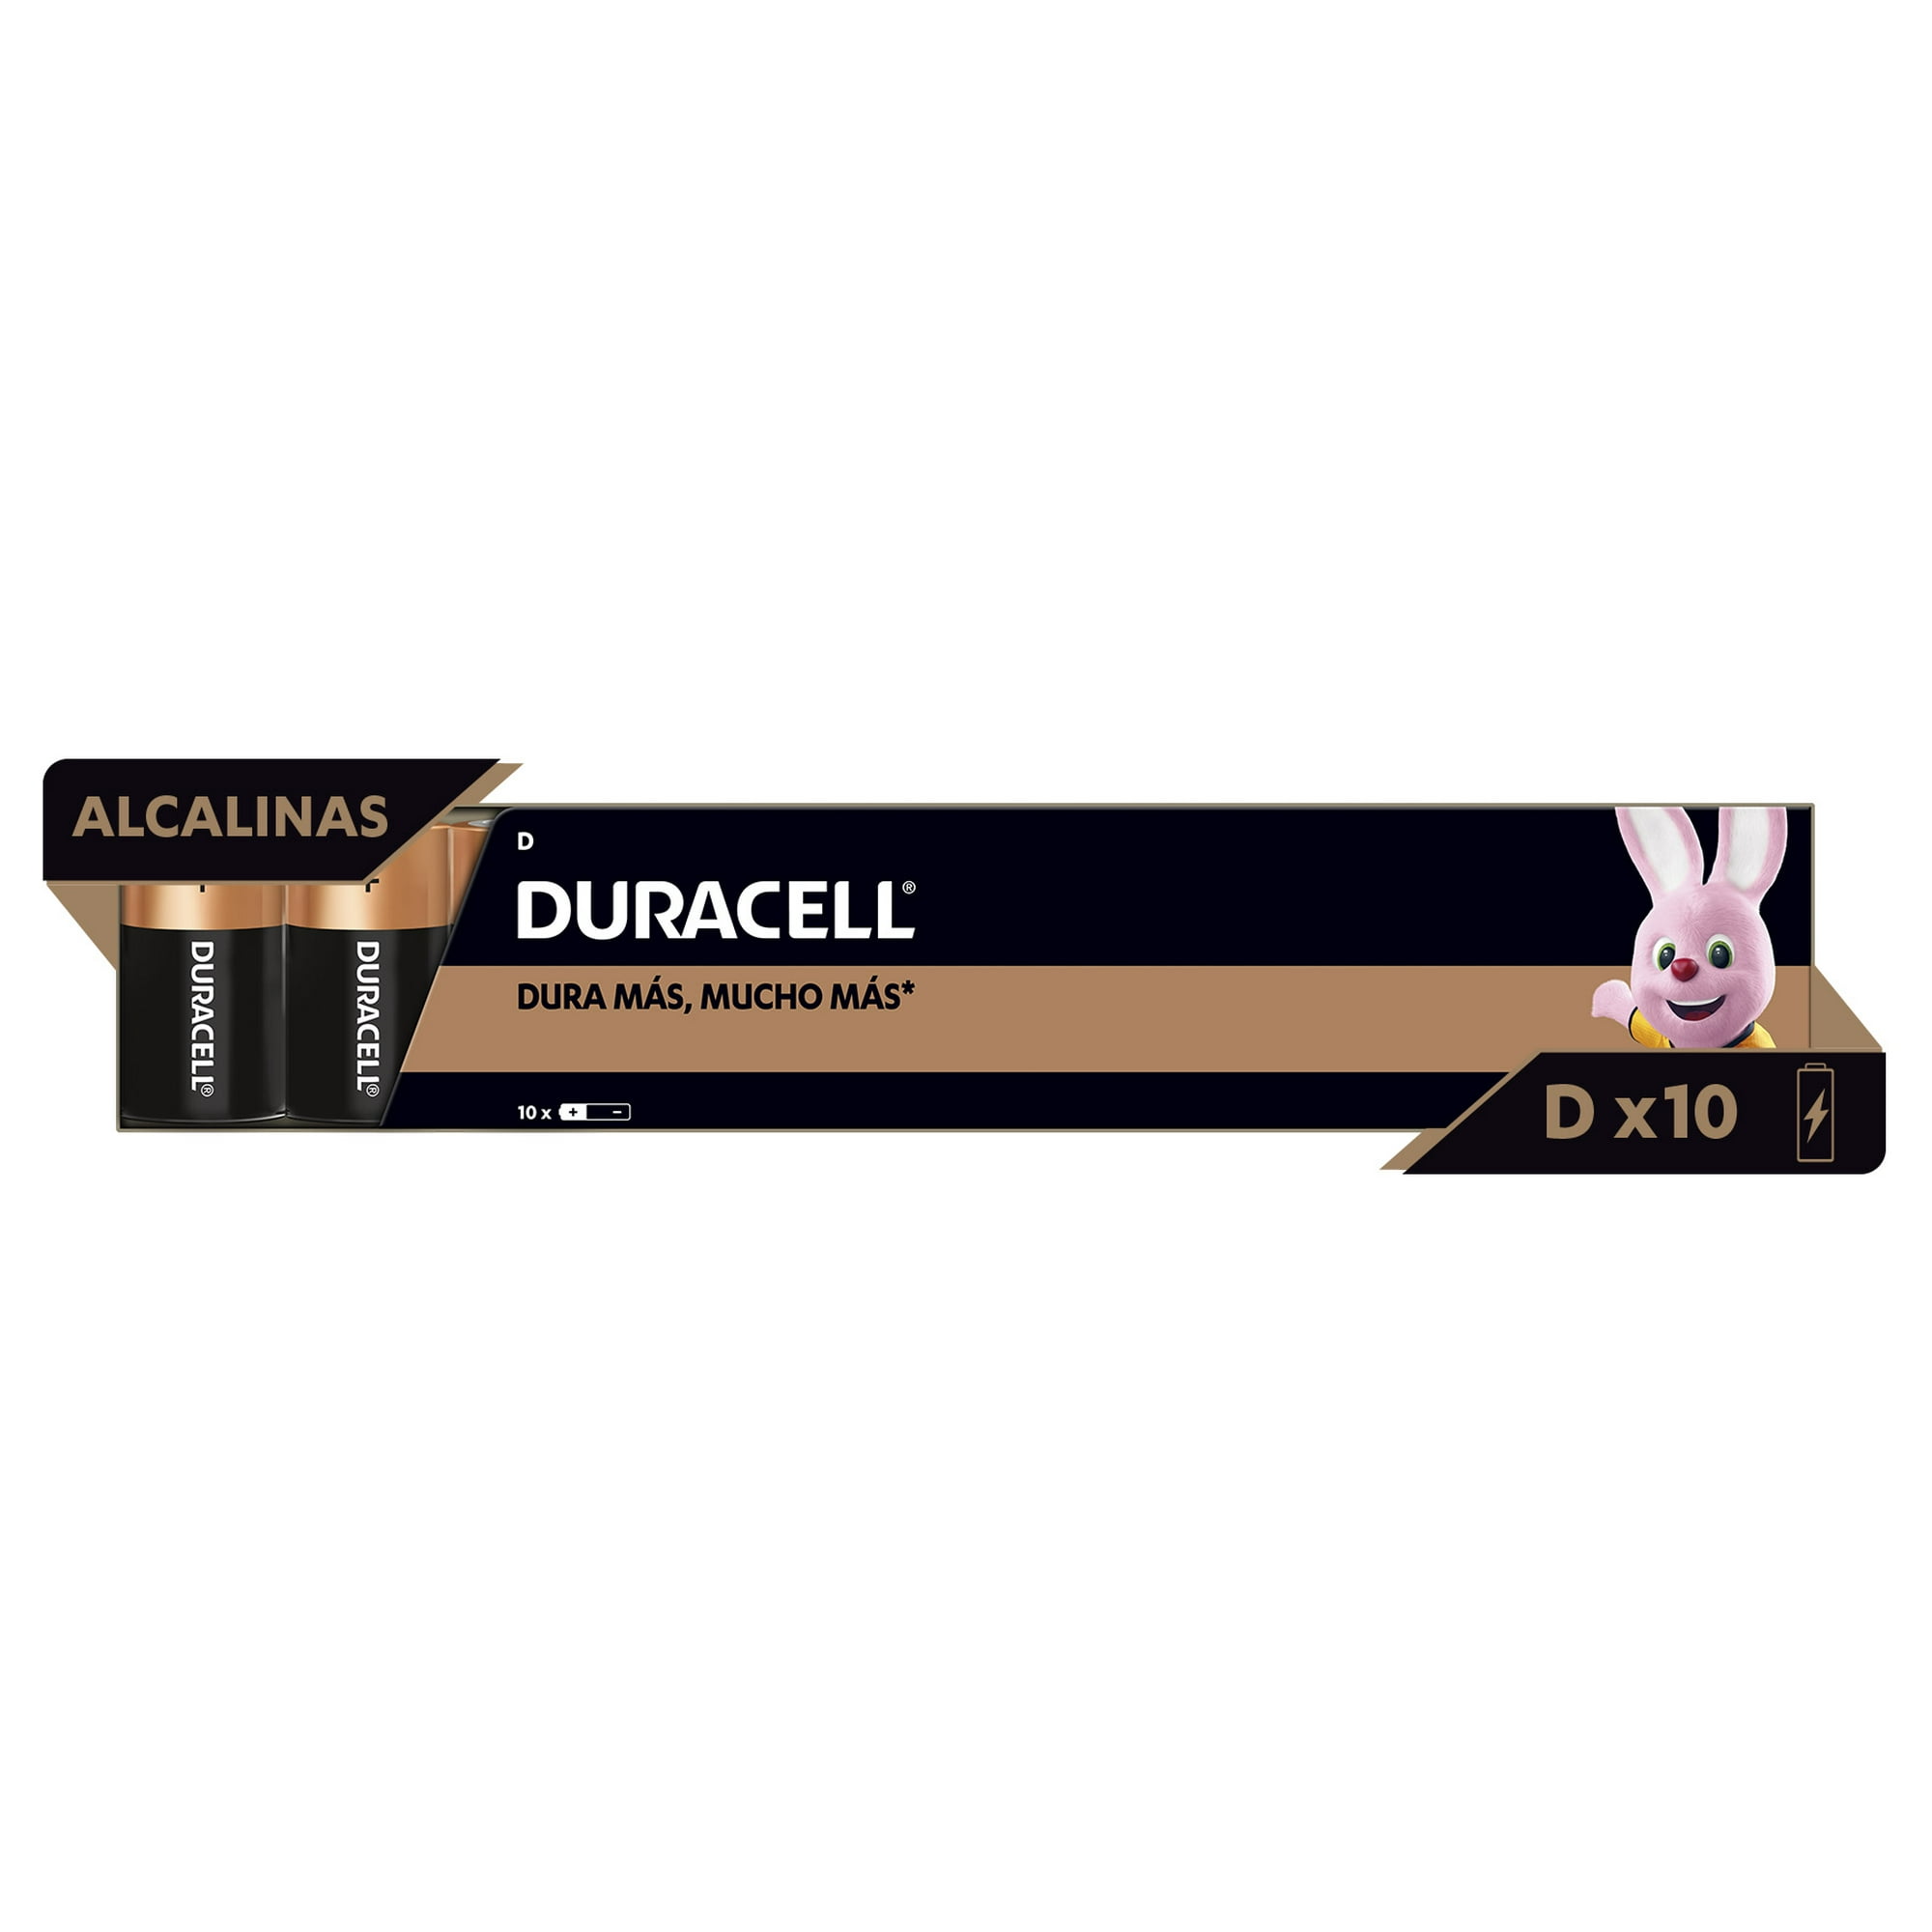 Duracell Pila Alcalina D C/10 piezas 1.5 Volts